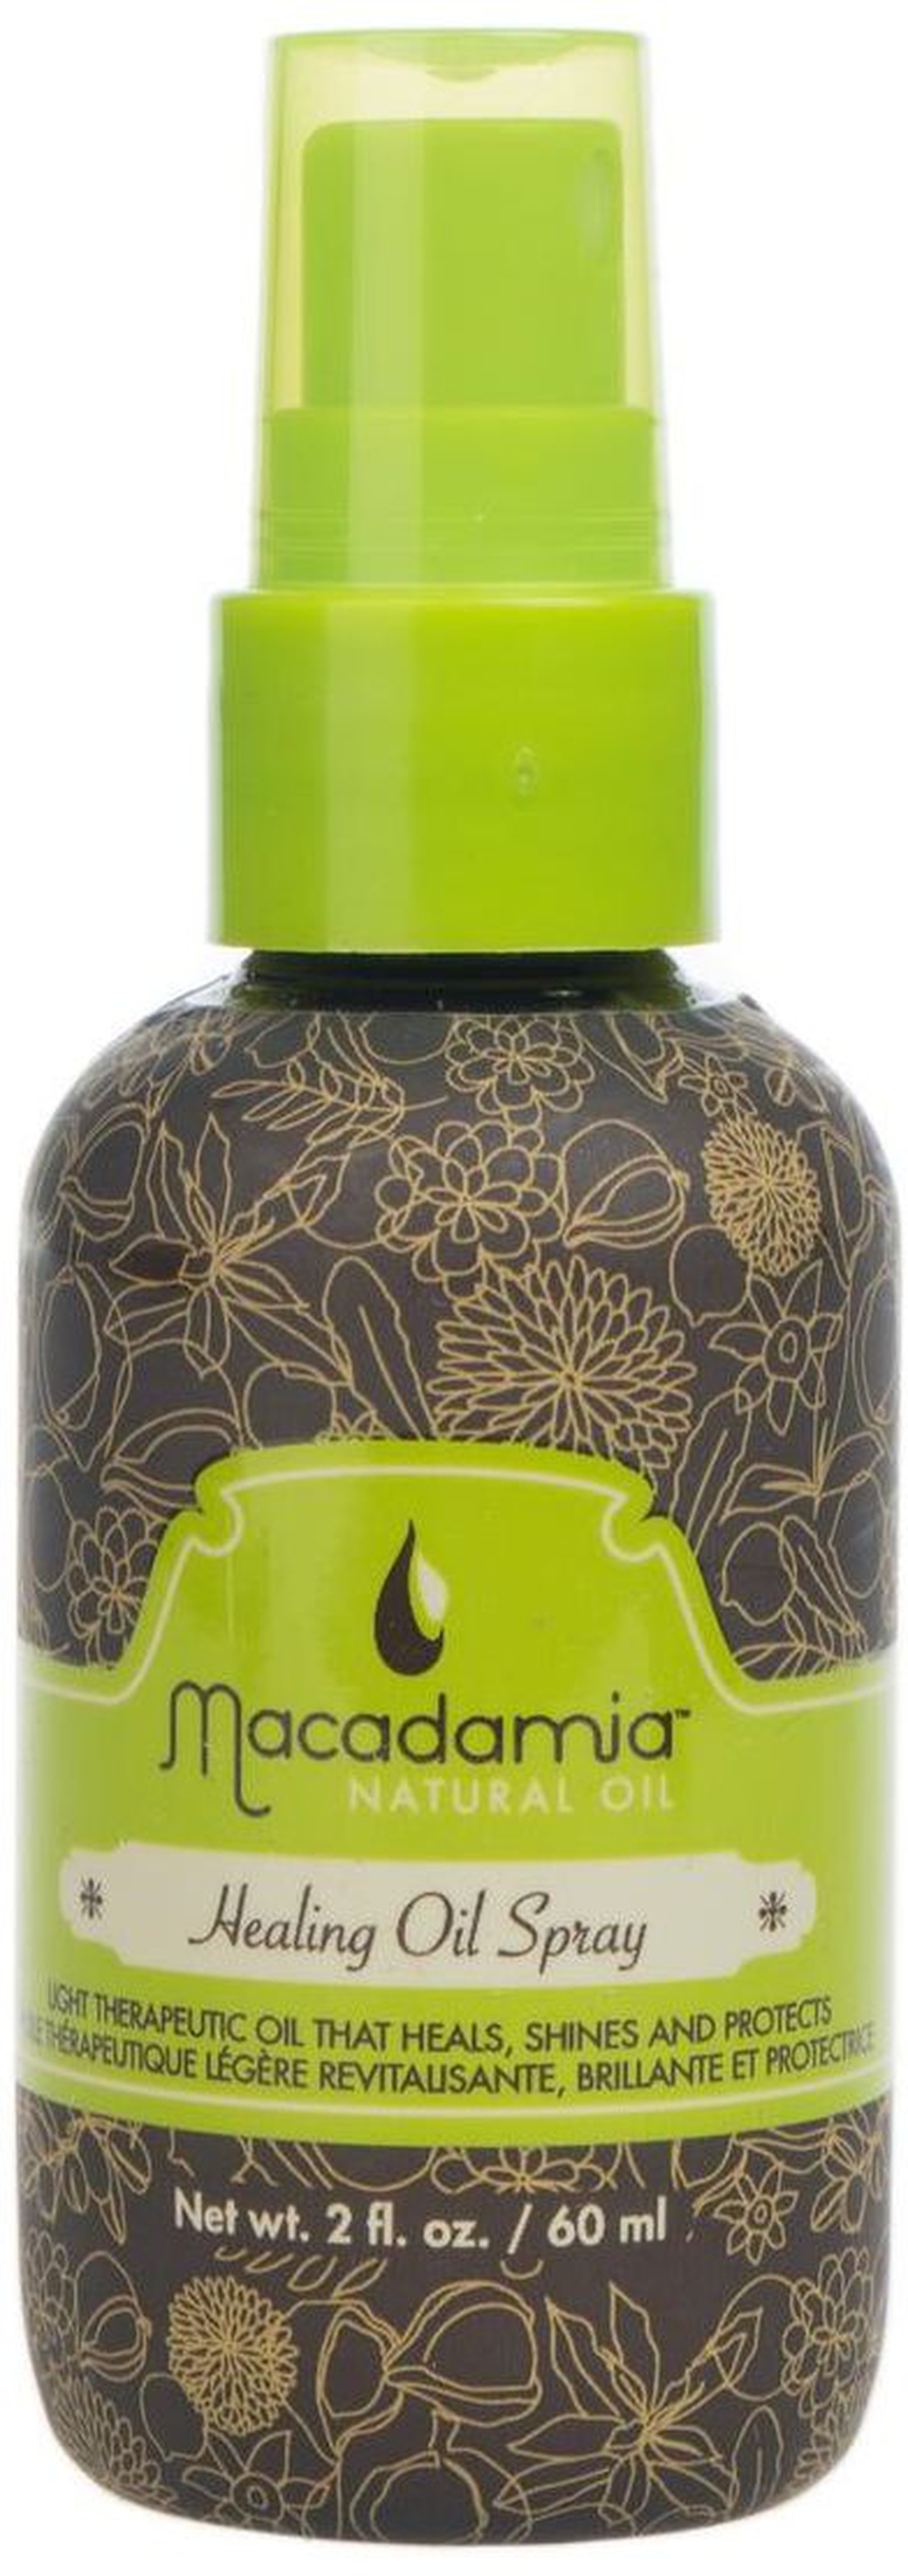 Macadamia уход восстанавливающий с маслом арганы и макадамии - спрей Macadamia Natural Oil, 60 ml фото